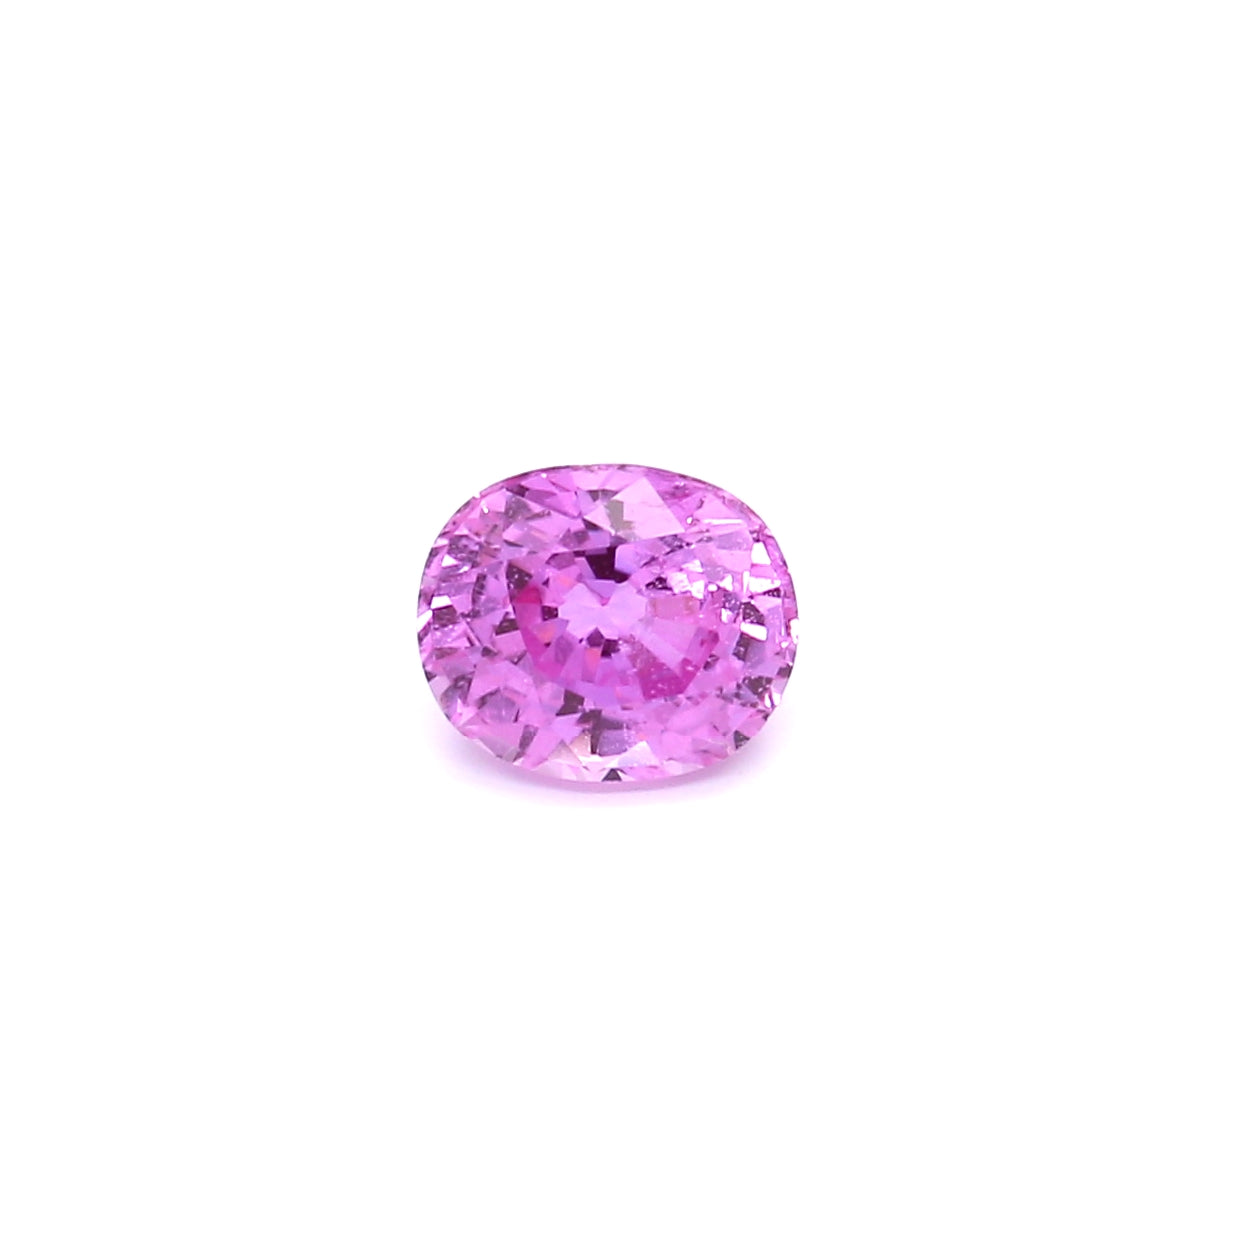 1.30ct Purplish Pink, Oval Sapphire, Heated, Madagascar - 6.69 x 5.62 x 4.14mm